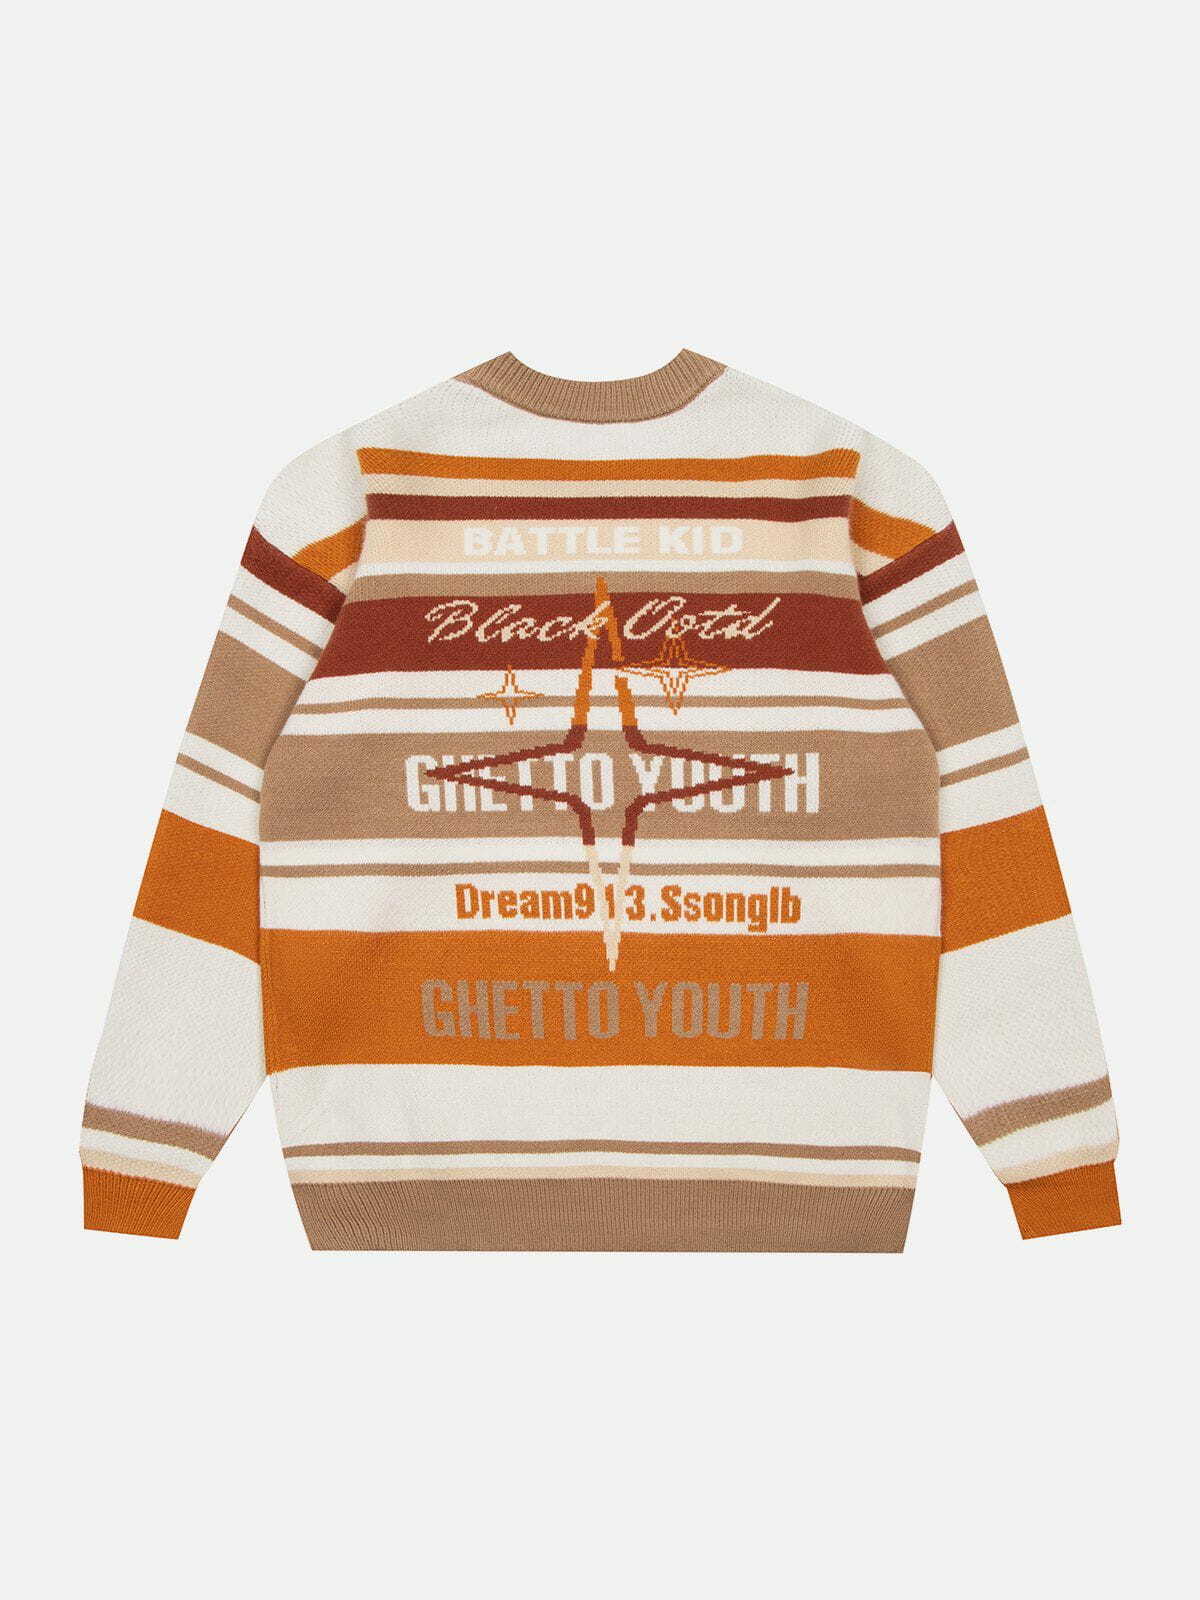 dynamic patchwork sweater striped urban style 4355